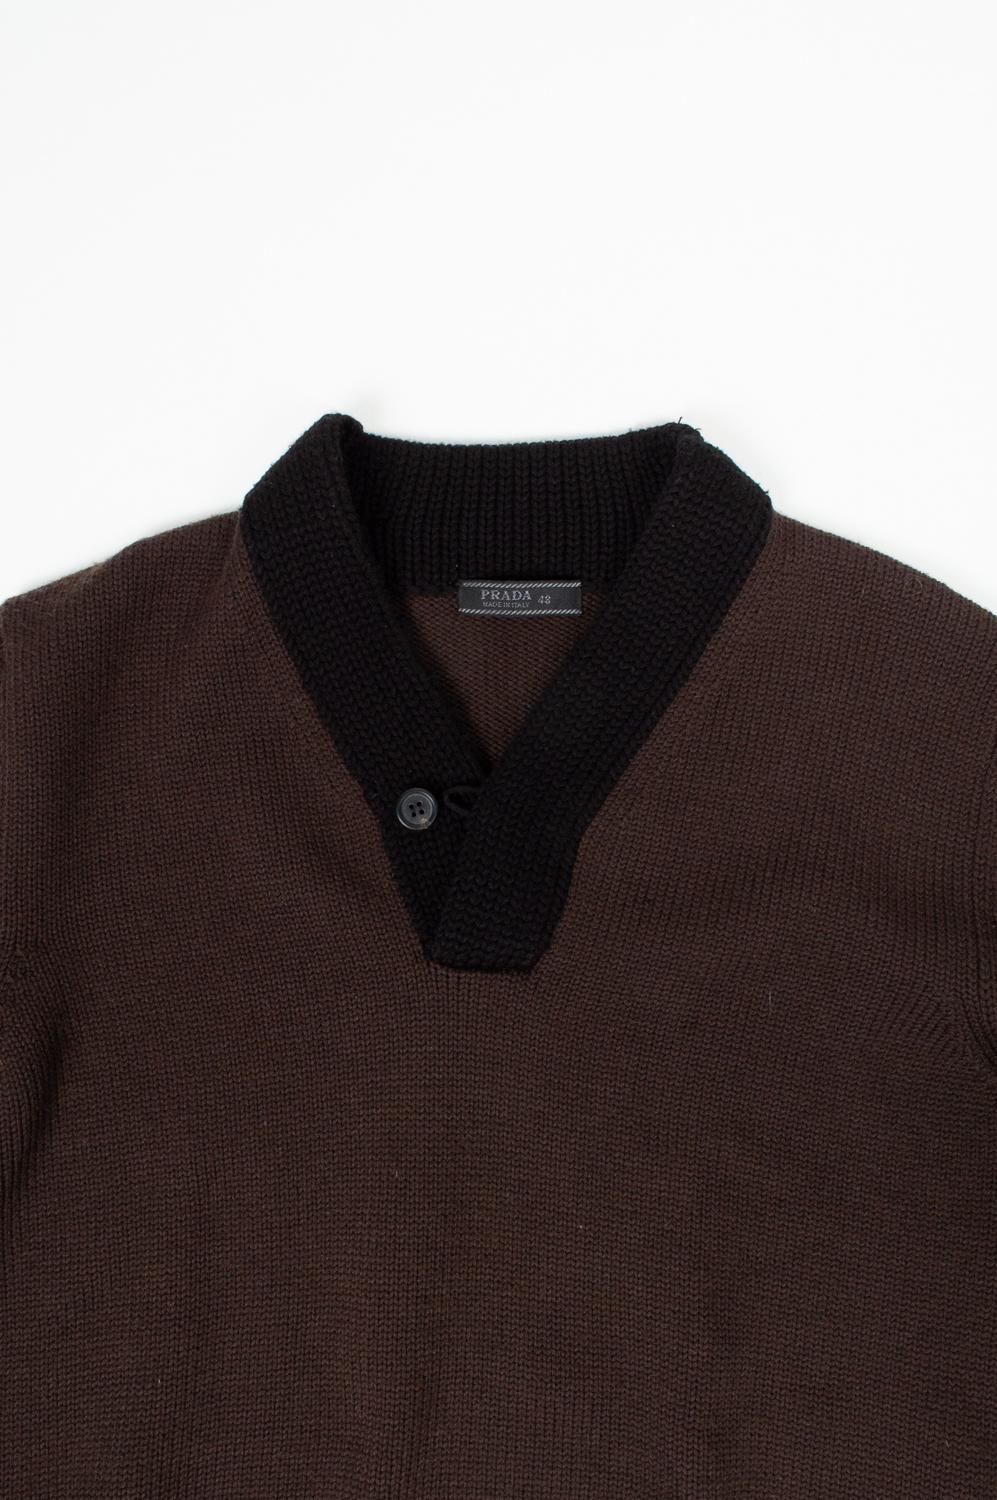 Prada Wool Men Sweater Heavy Knit Size 48ITA (Medium) S582 In Excellent Condition For Sale In Kaunas, LT